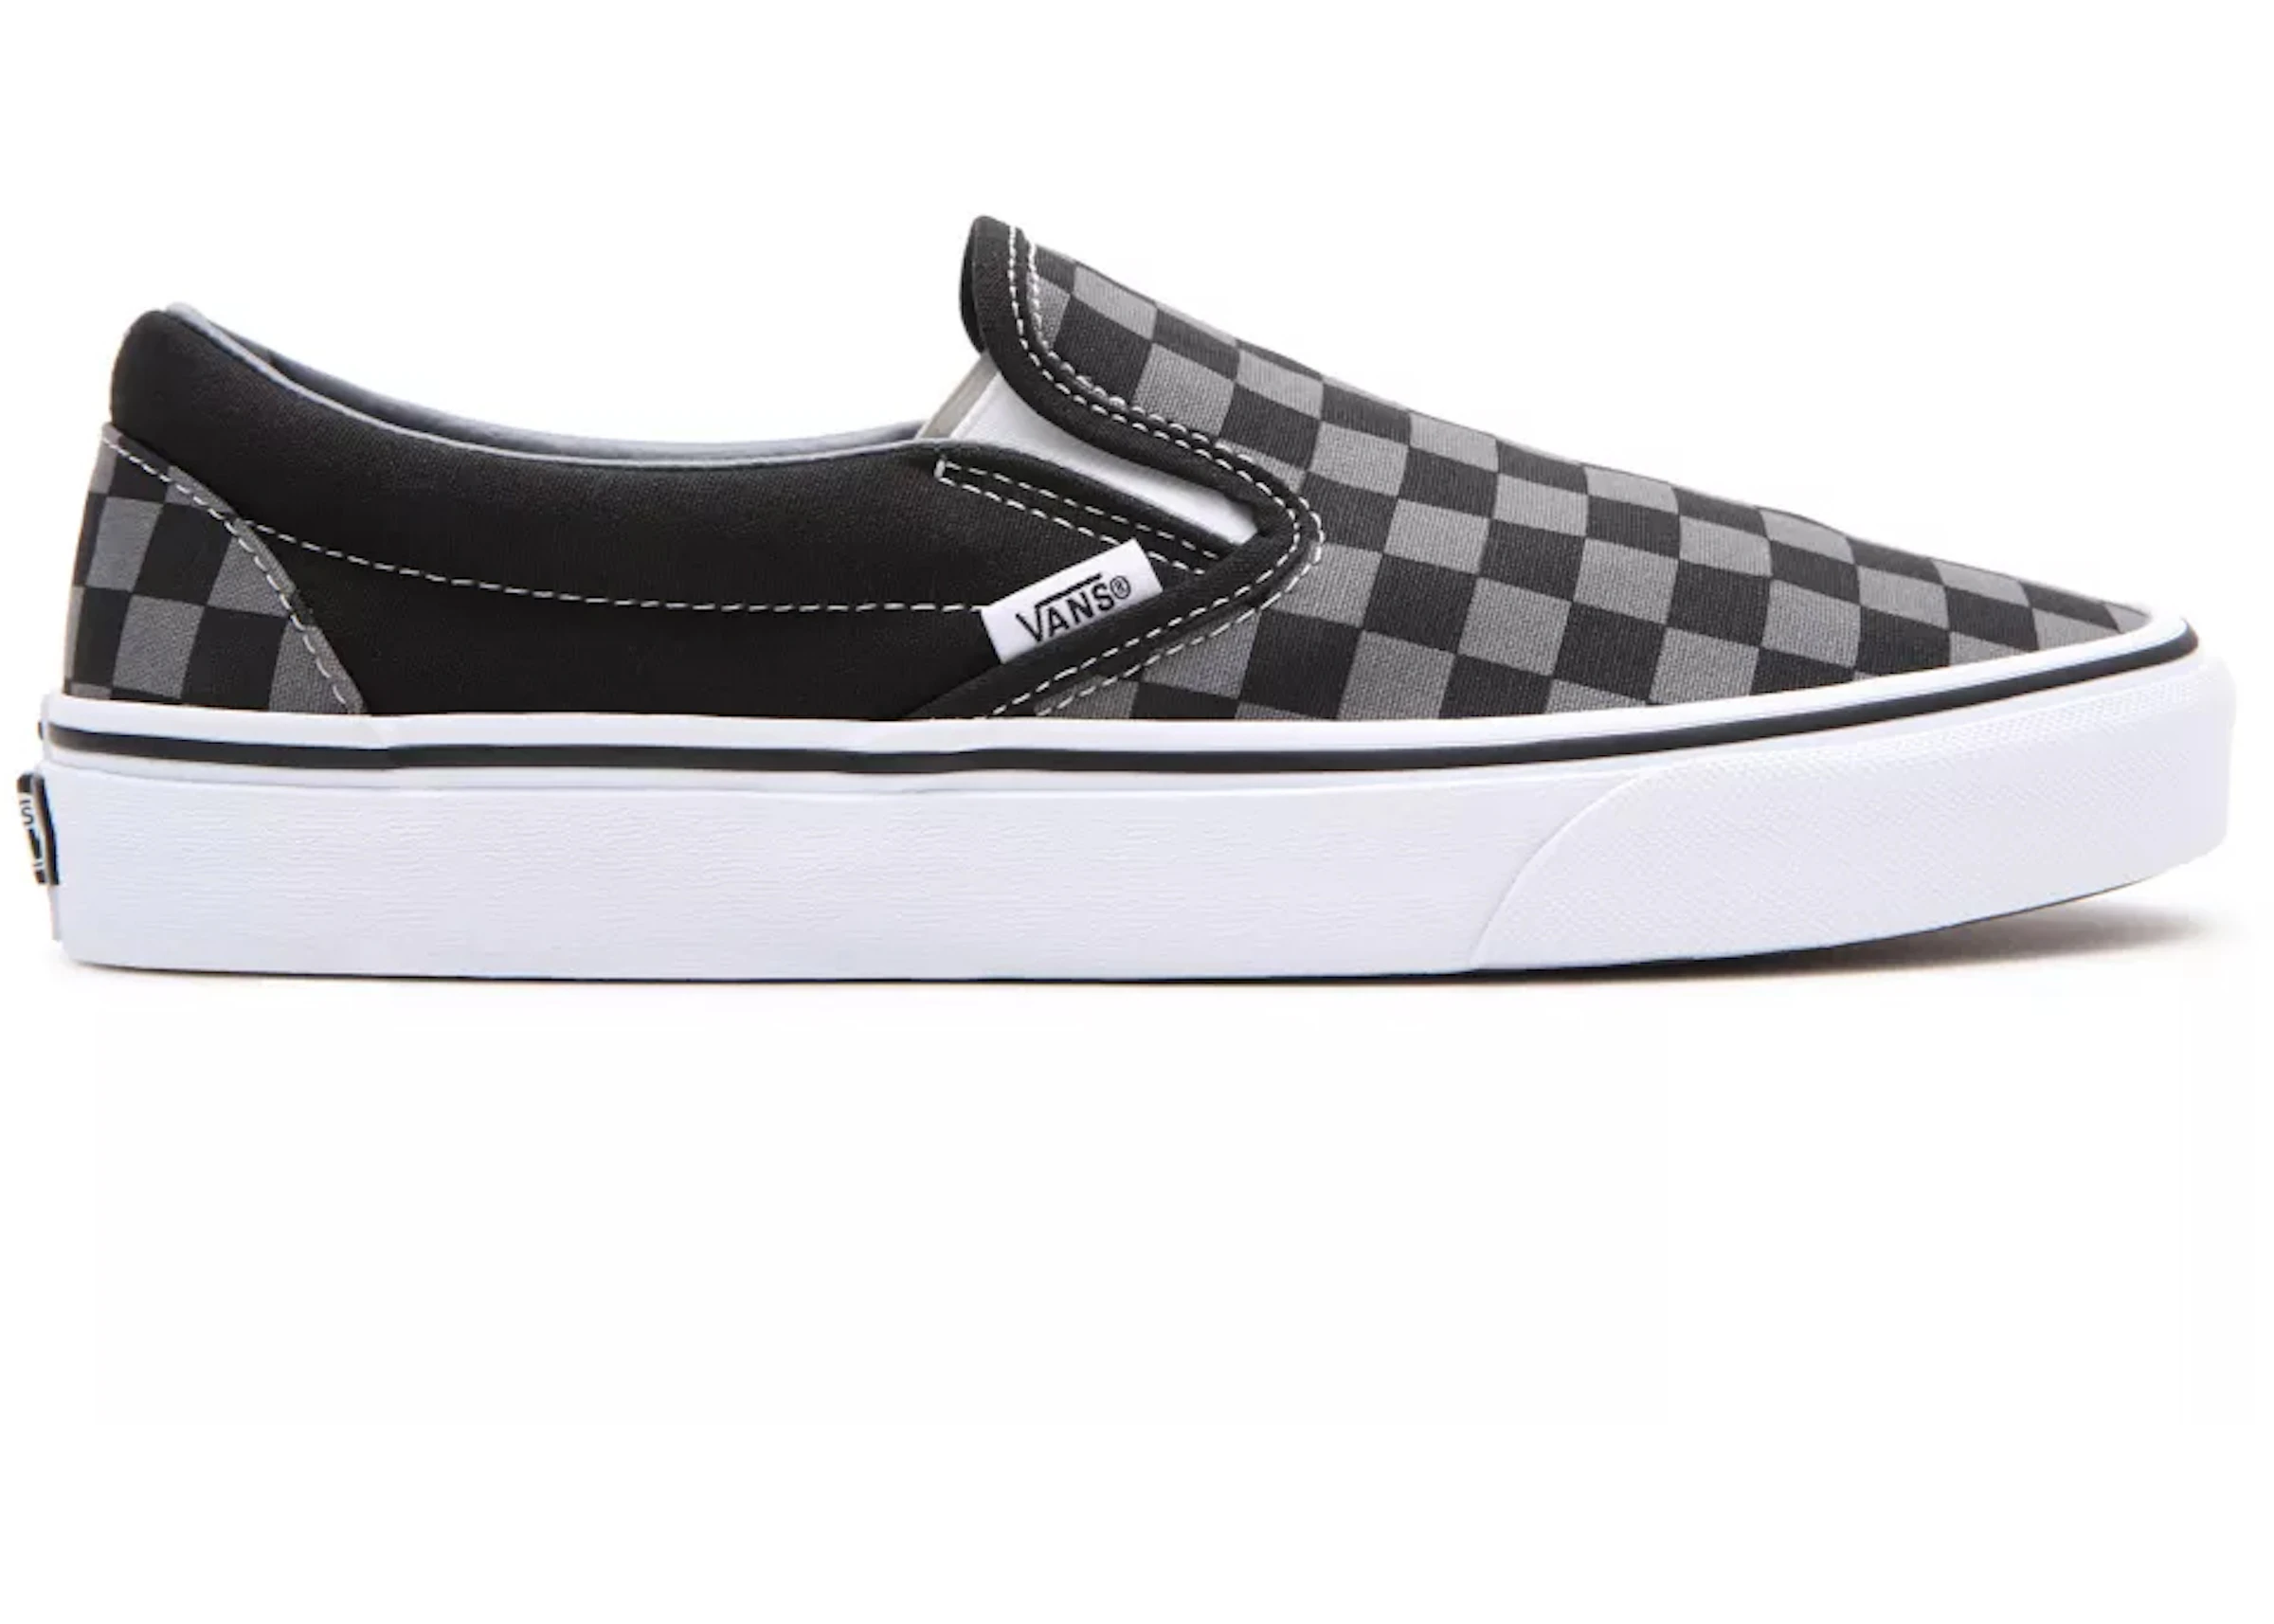 Vans Classic Slip-On Checkerboard Black Grey - VN000EYEBPJ - US